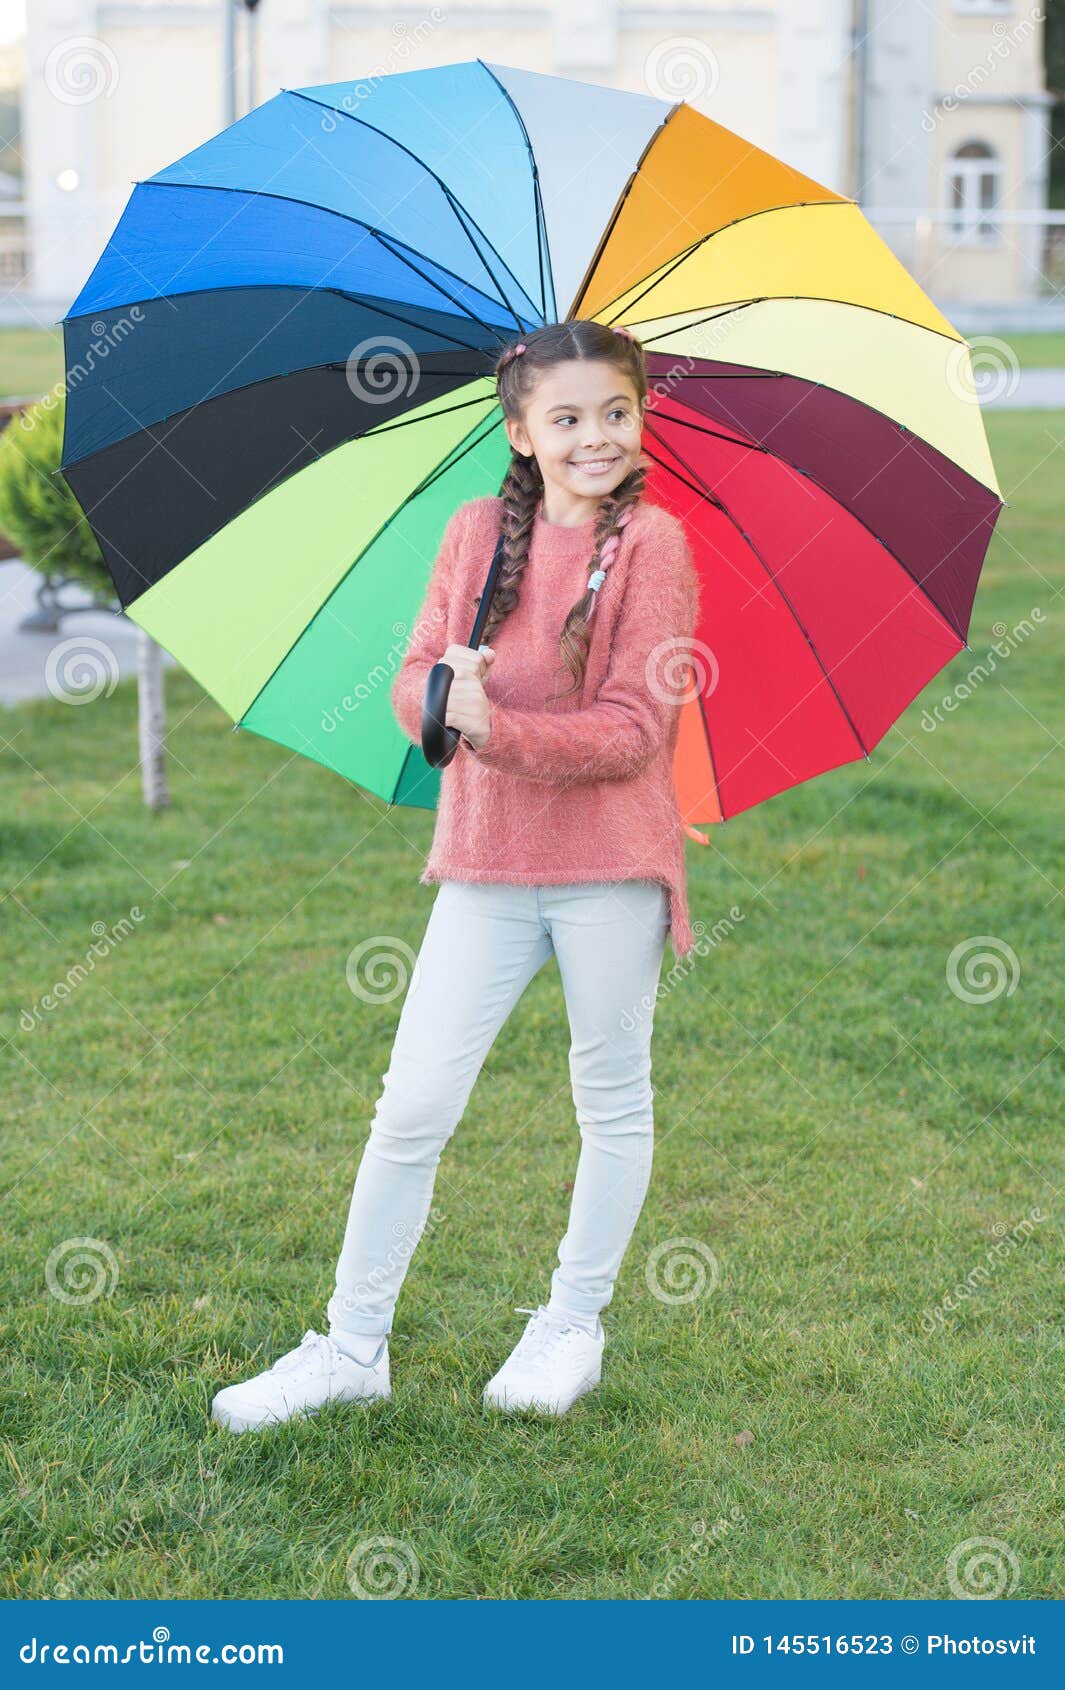 Umbrella For Little Happy Girl Rainbow After Rain Cheerful